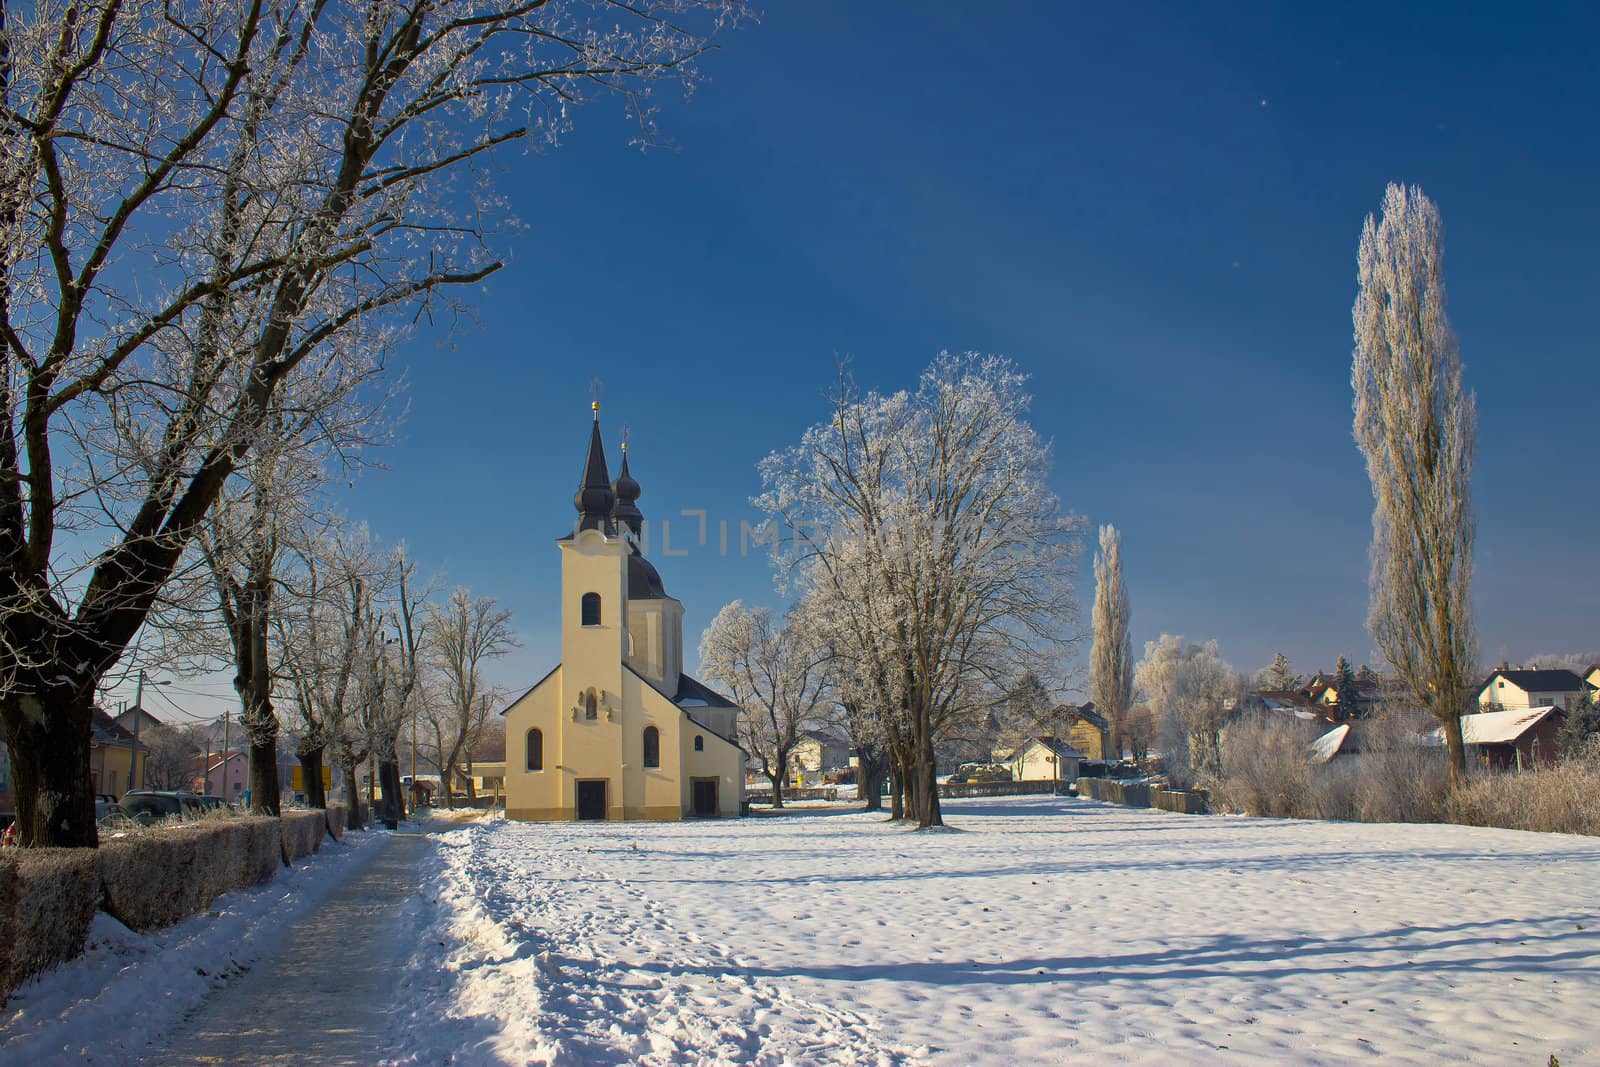 Idyllic winter - Church in snow, Krizevci, Croatia